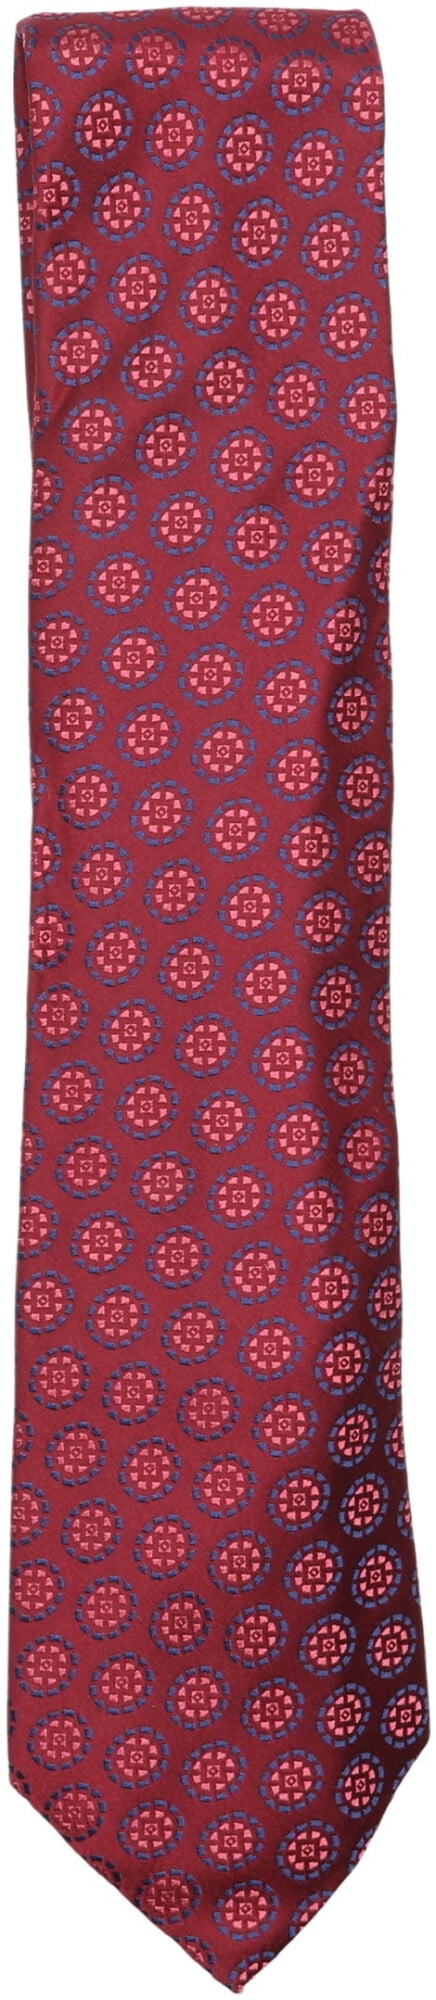 Circle Print Pattern Hand Made Men's Tie by Manzini Neckwear 